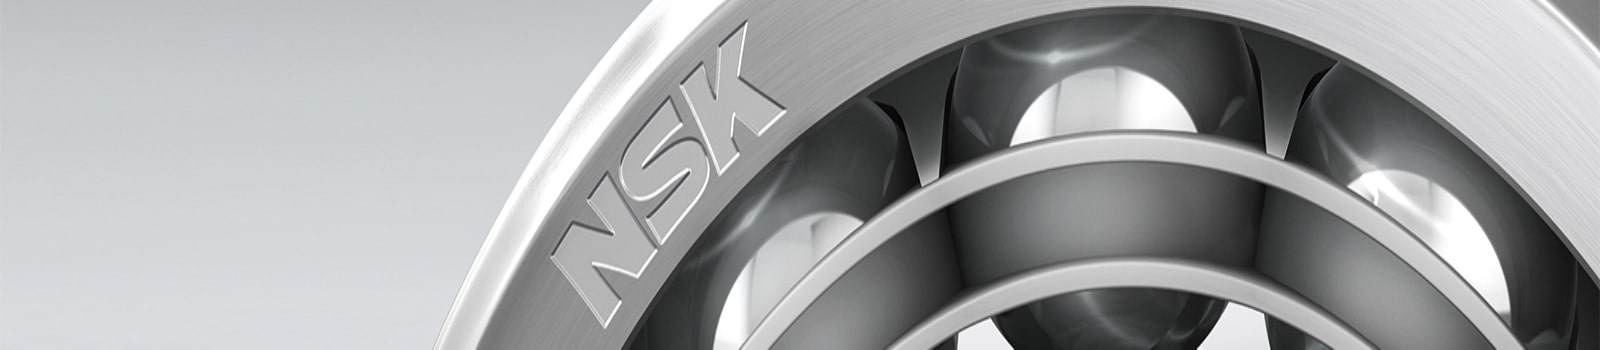 NSK轴承用于冶金设备-NSK